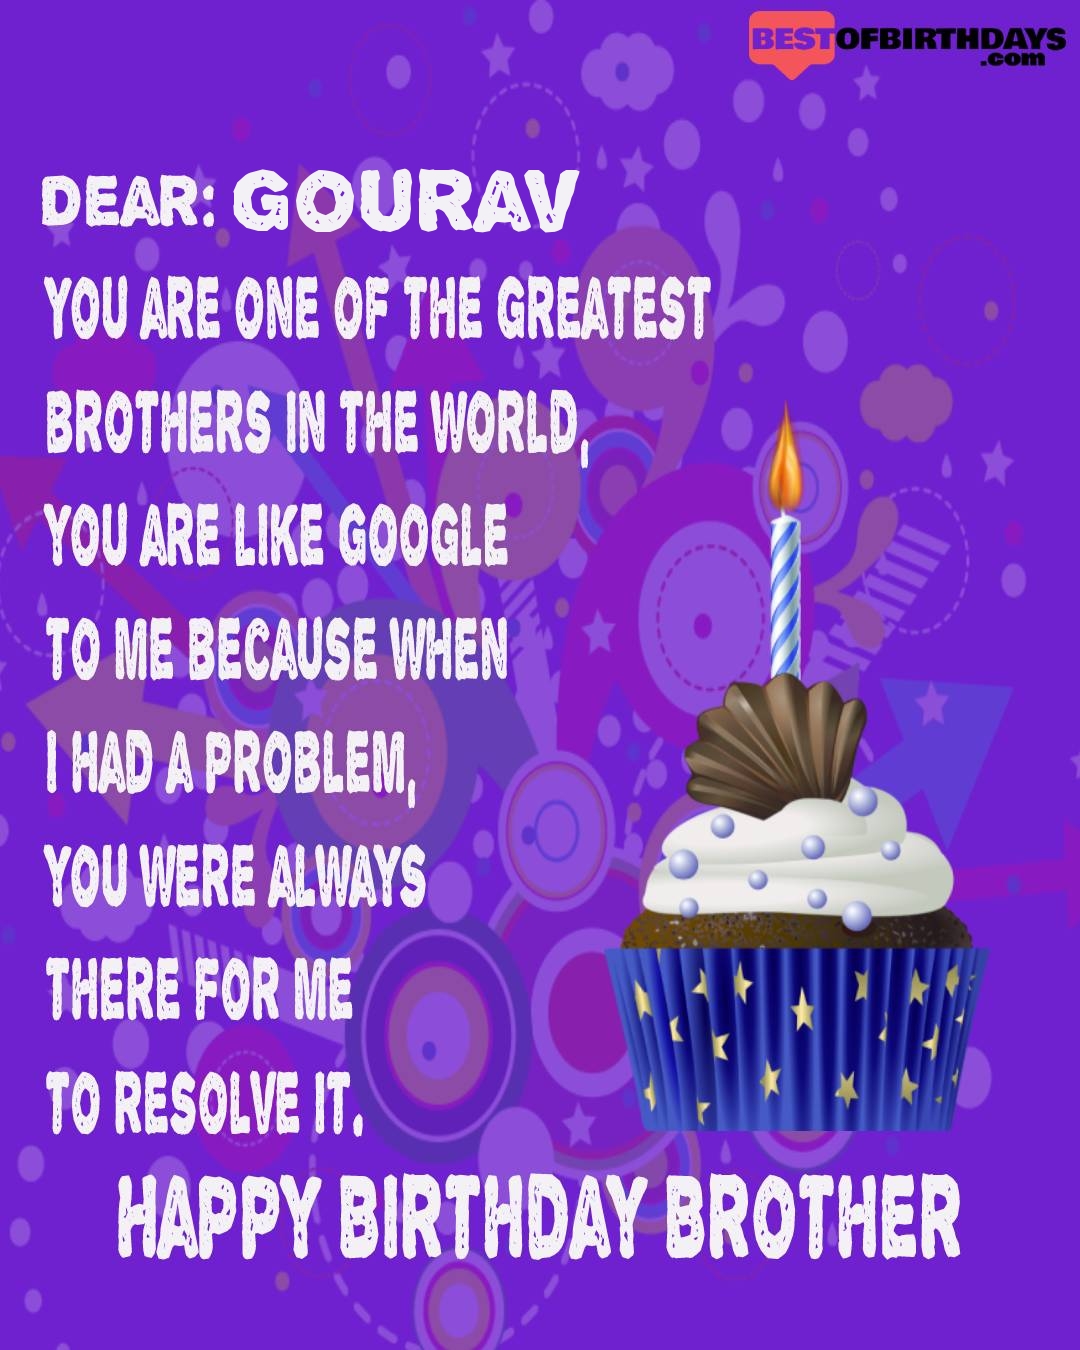 Happy birthday gourav bhai brother bro